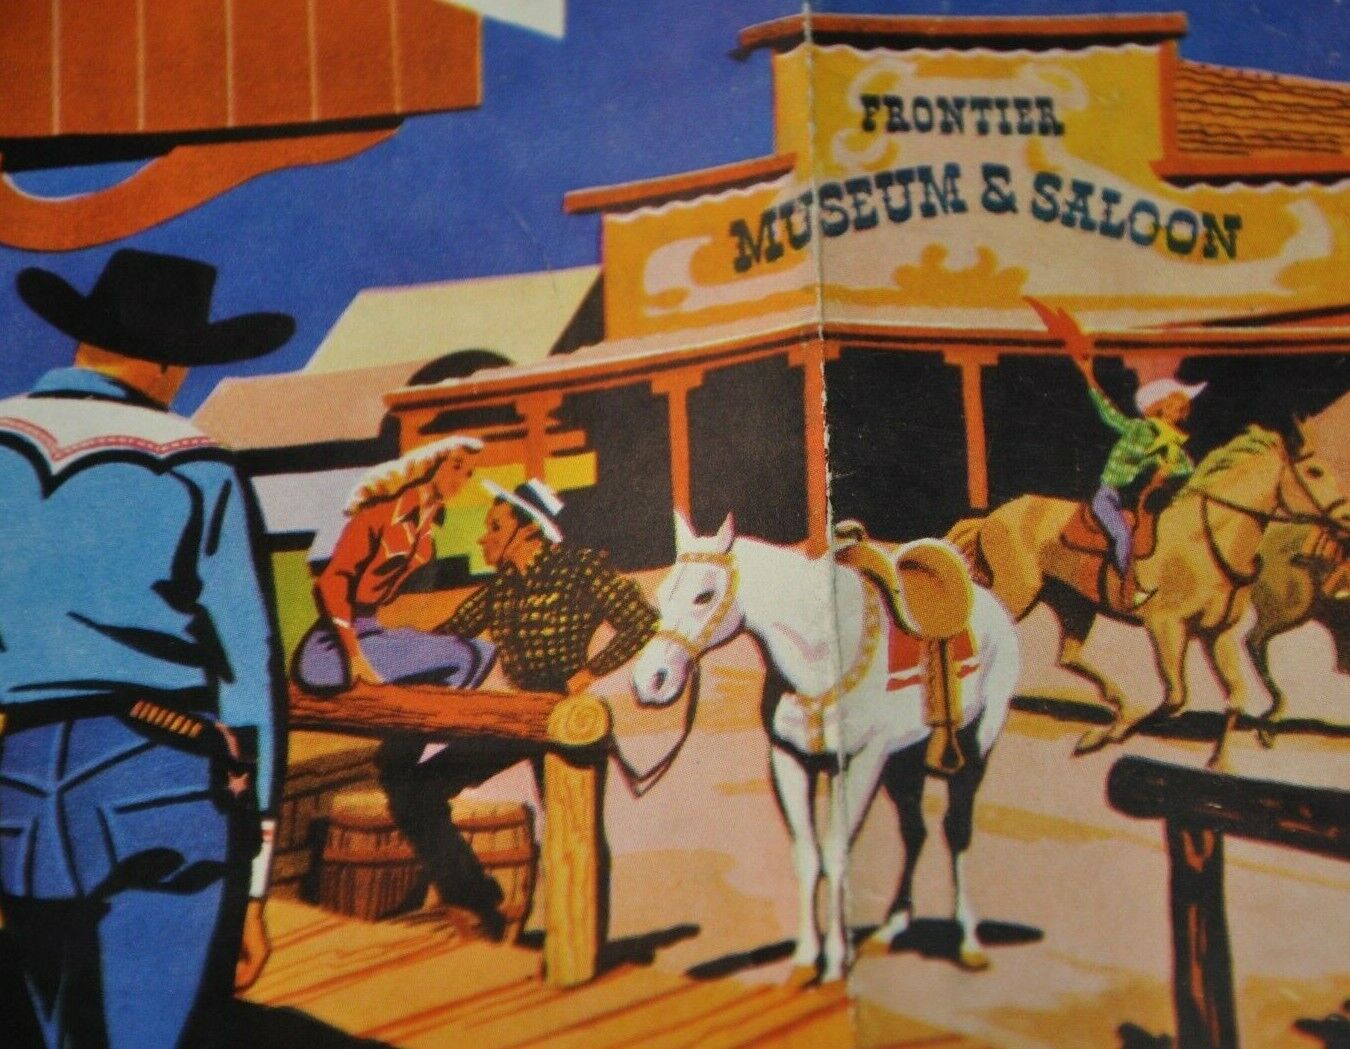 Last Frontier Village Hotel Las Vegas Nevada Promotional Brochure 1960s